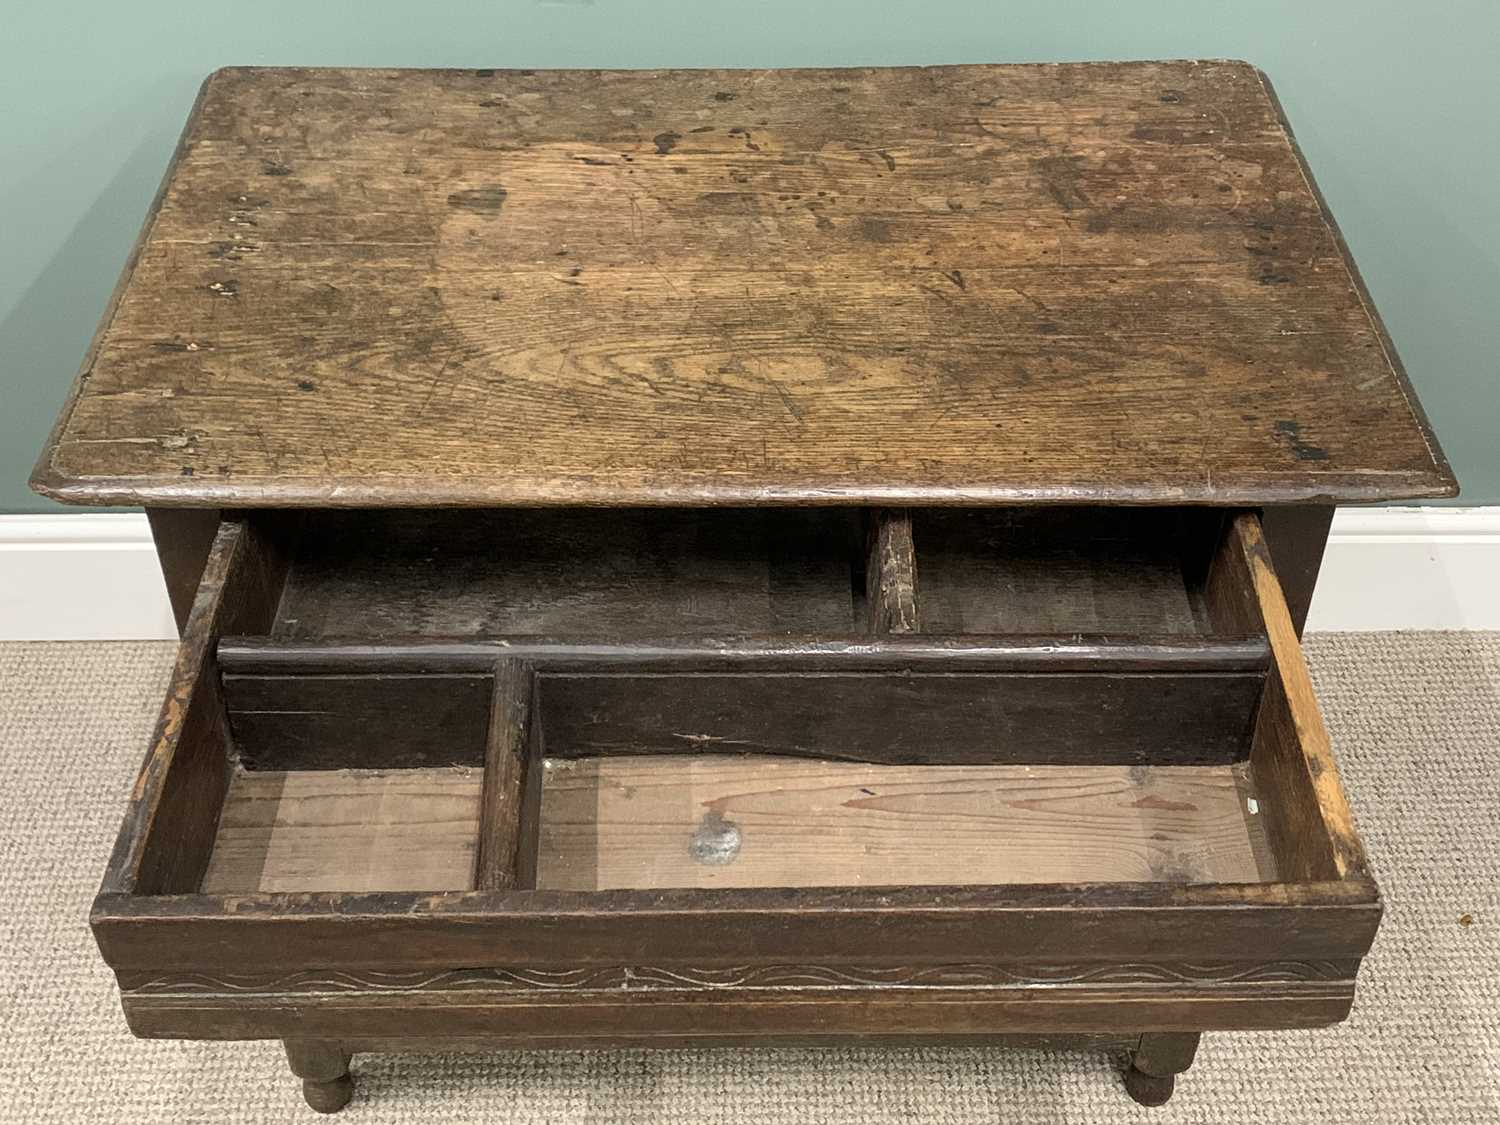 ANTIQUE OAK SINGLE DRAWER TABLE circa 1800, planked top, moulded edge, carved drawer front, peg - Image 4 of 4